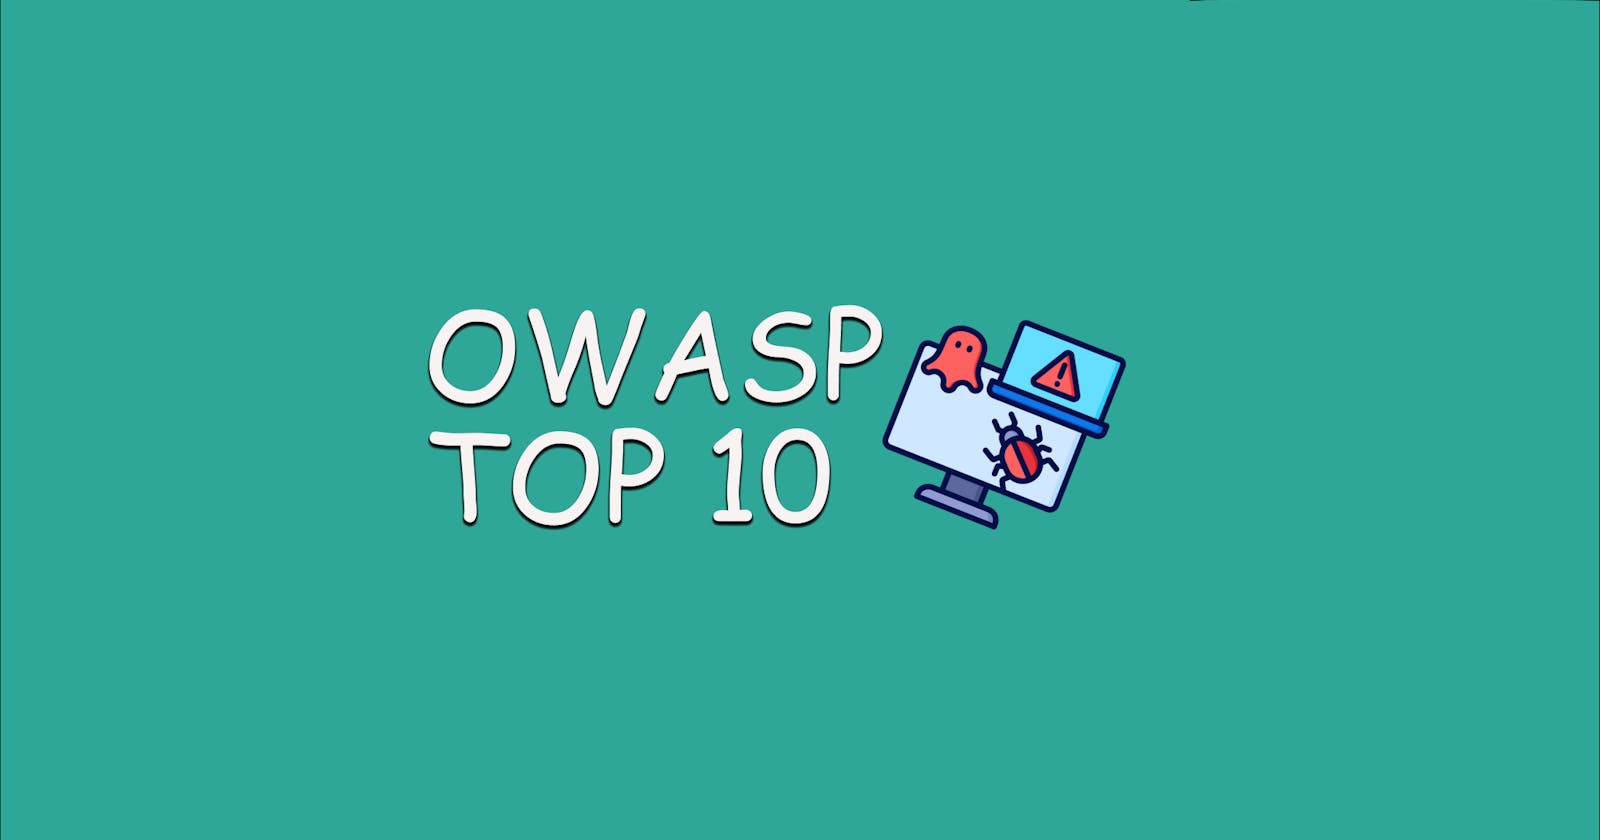 OWASP TOP 10 Web Application Security Risks